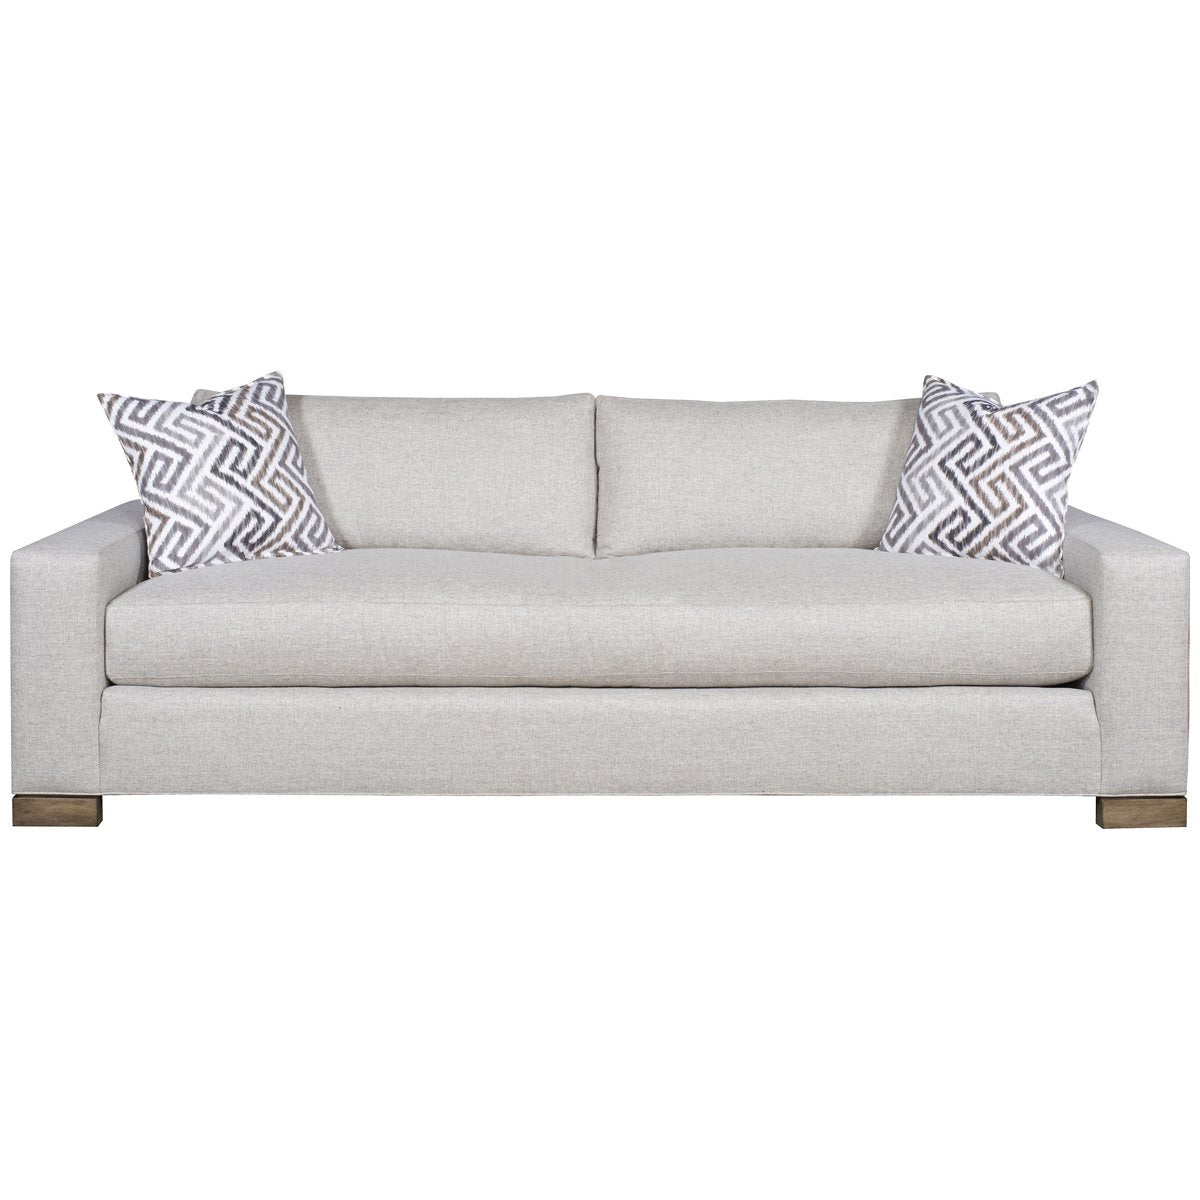 Vanguard Furniture Claremont Sleep Sofa - Tepro Ash